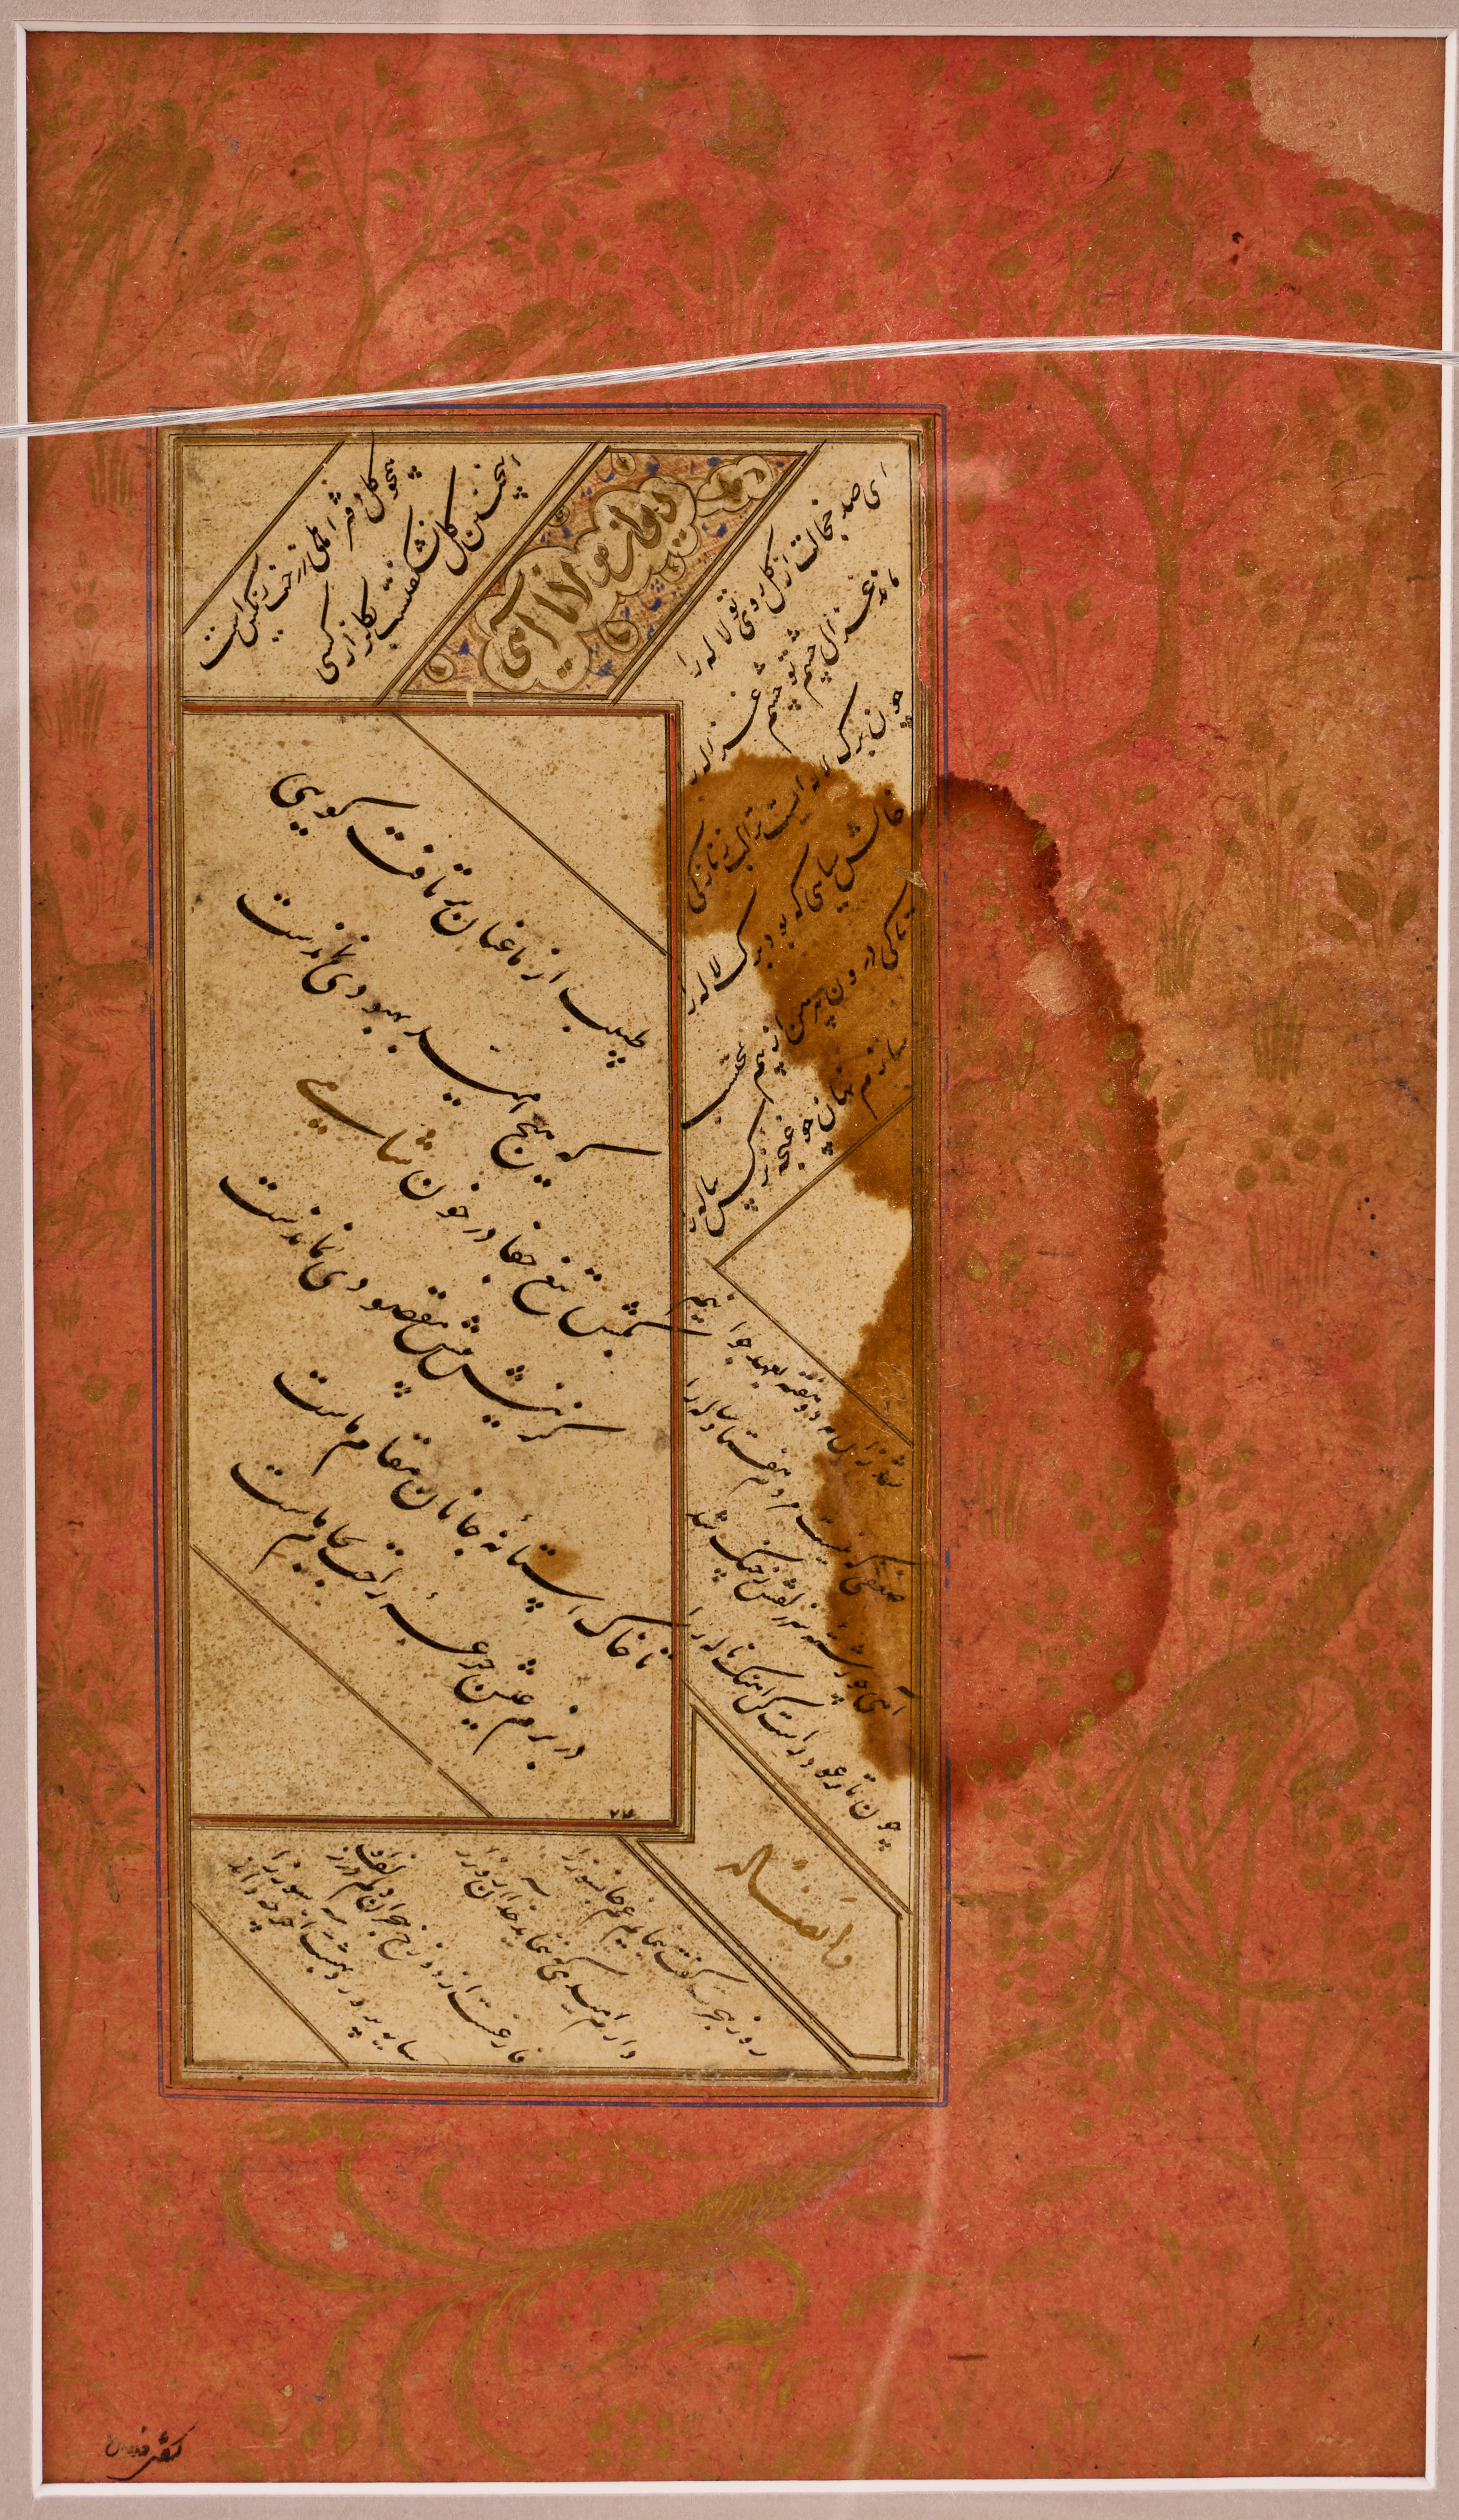 AN ILLUMINATED SAFAVID FOLIO, SAFAVID SHIRAZ, IRAN, SECOND HALF 16TH CENTURY - Image 2 of 2